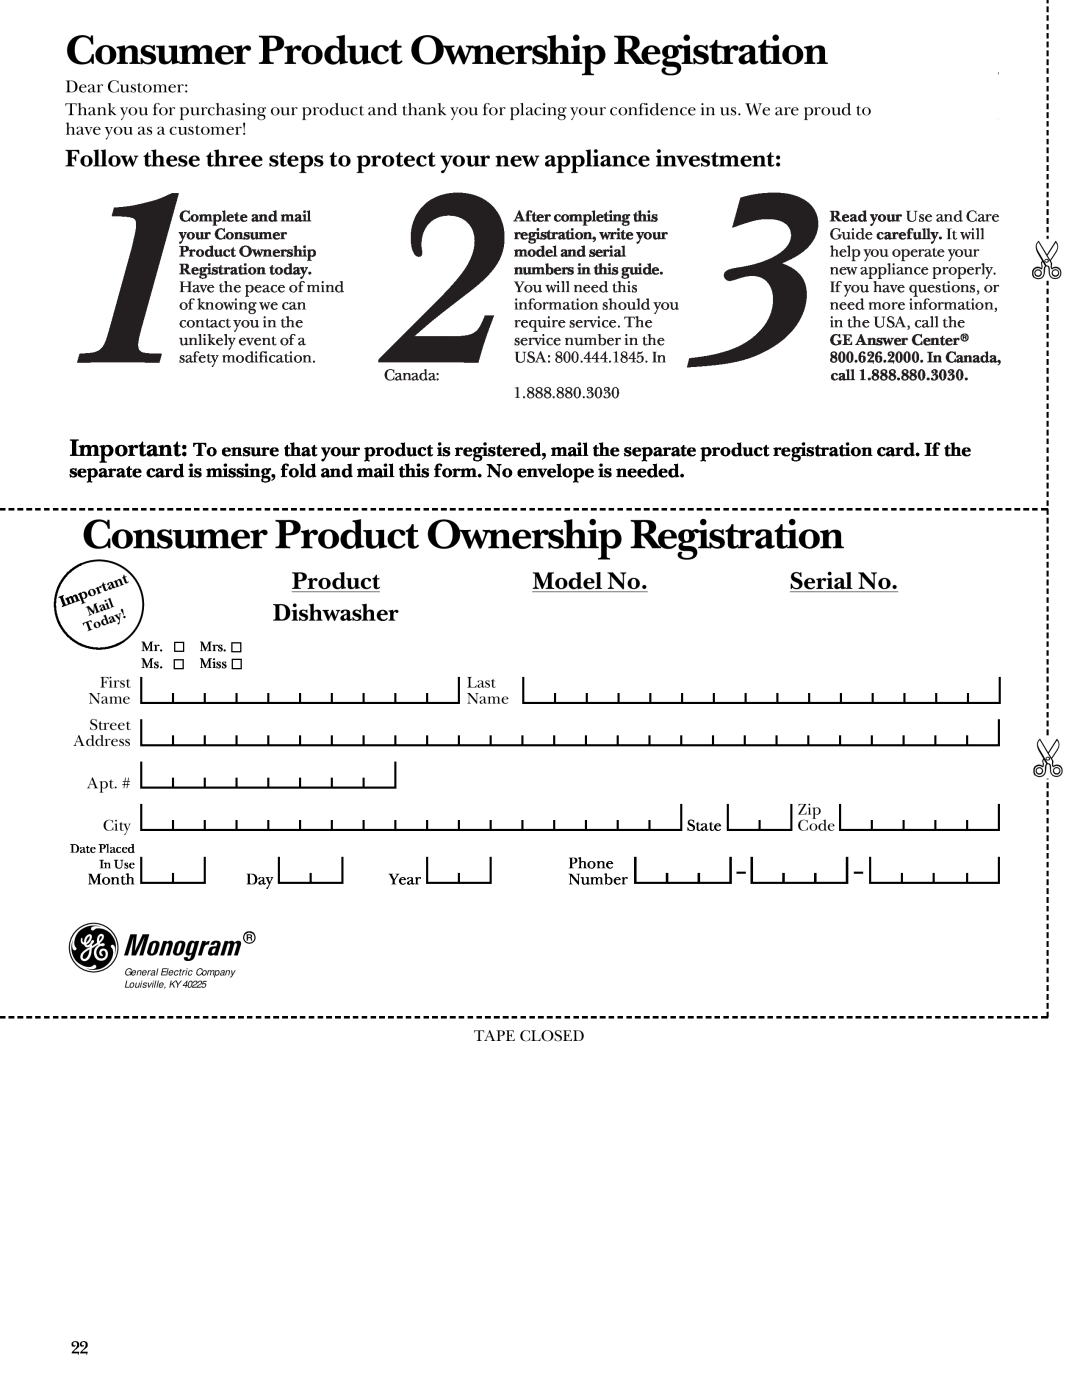 GE Monogram ZBD4200, ZBD4500 manual Consumer Product Ownership Registration, Model No, Serial No, Dishwasher, Monogram 